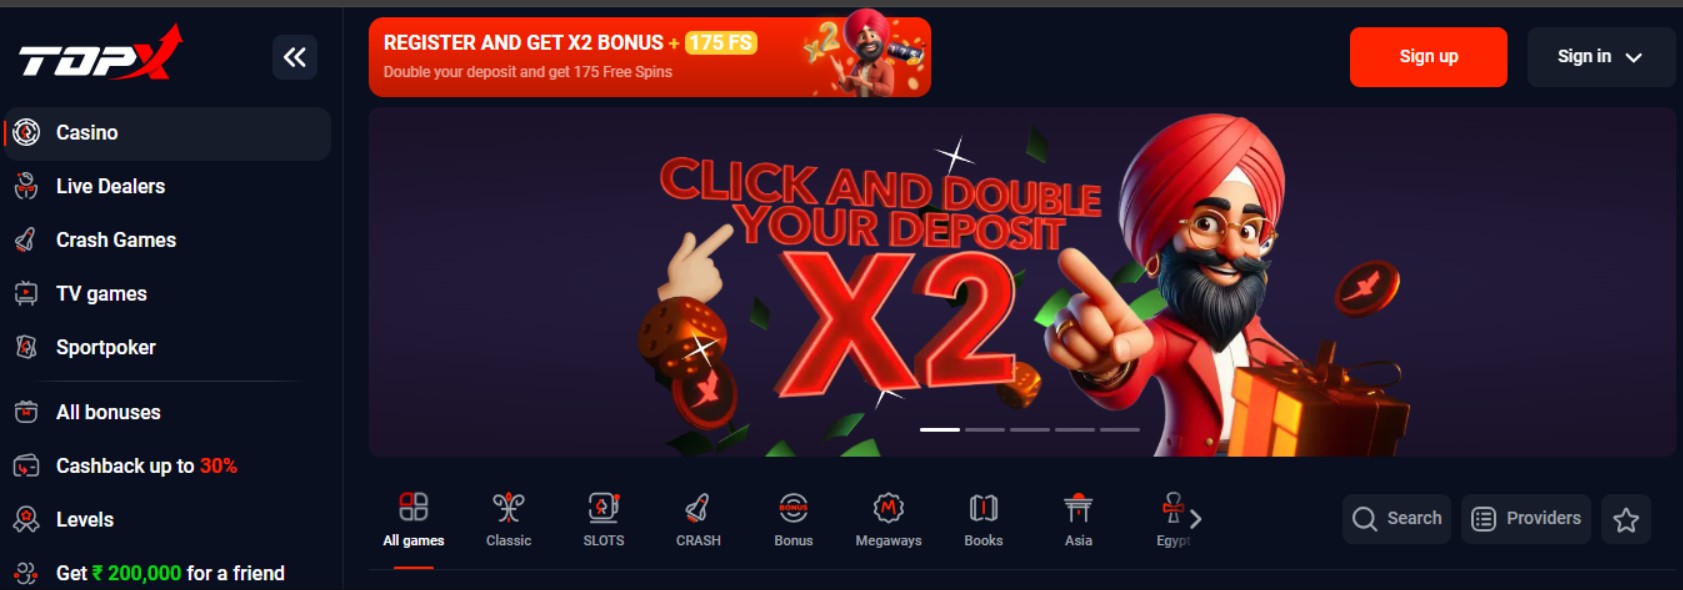 TopX casino online